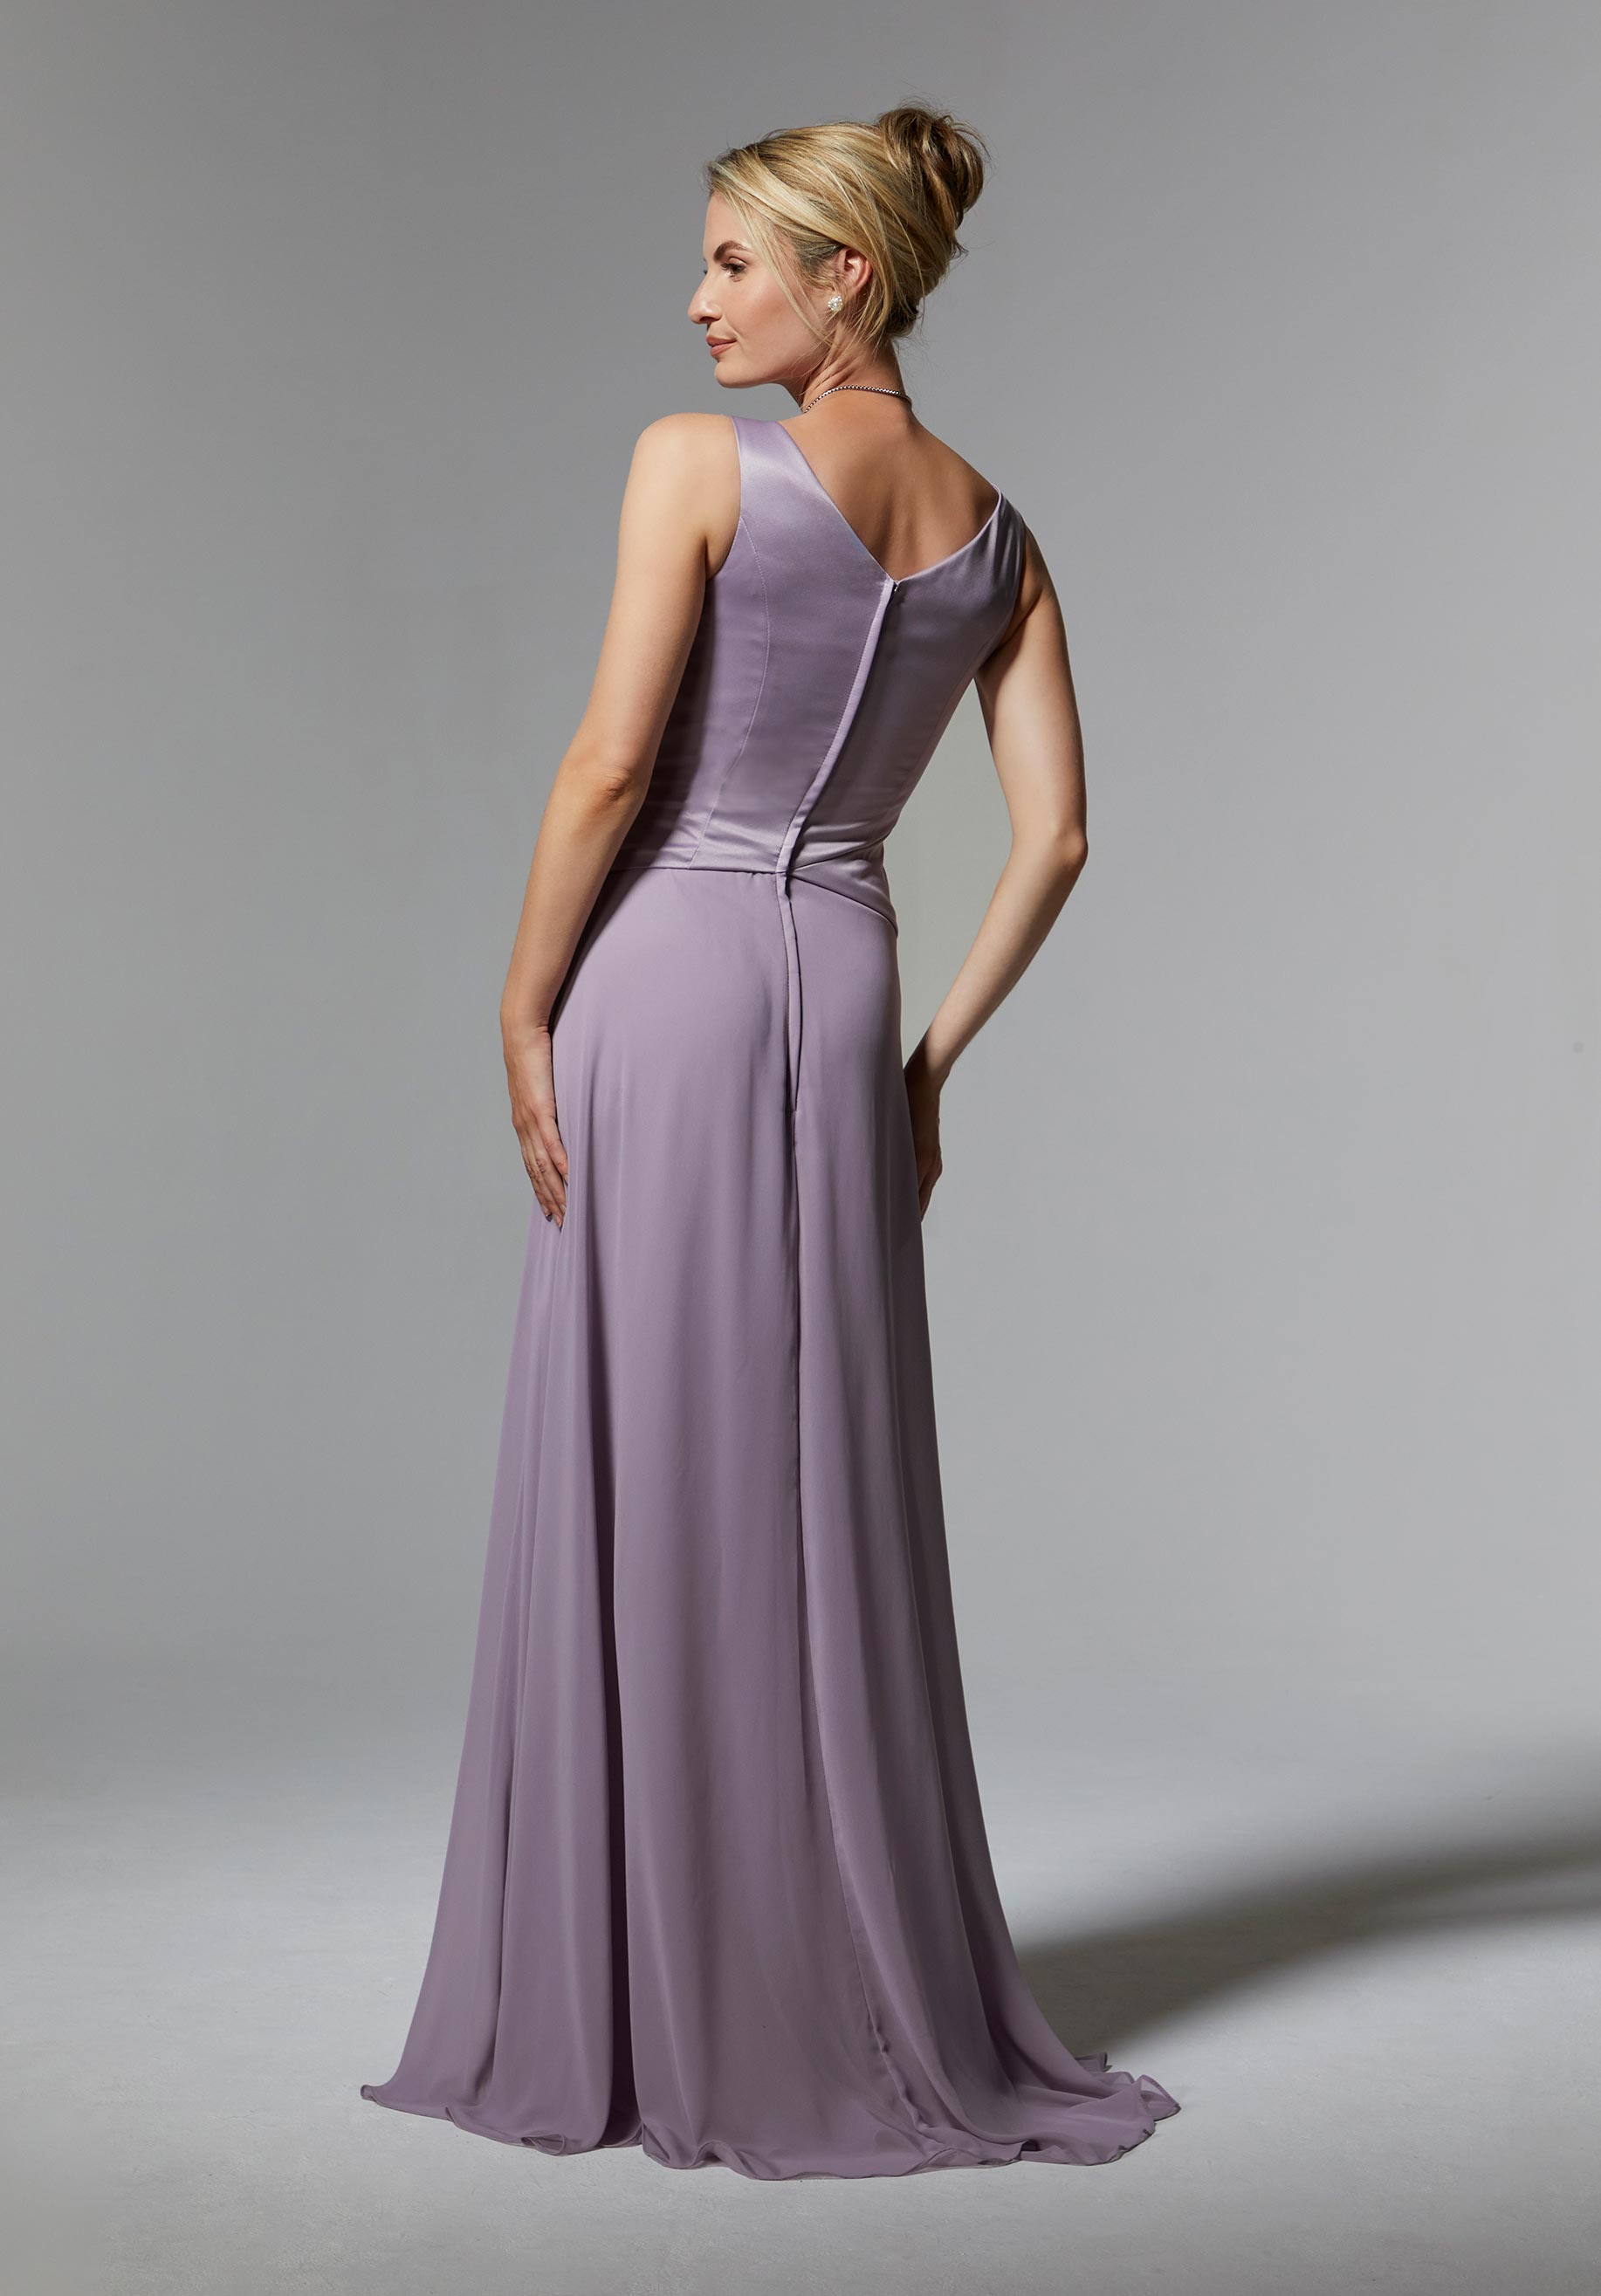 MGNY - 72903 - Cheron's Bridal, Mother/Party Dress